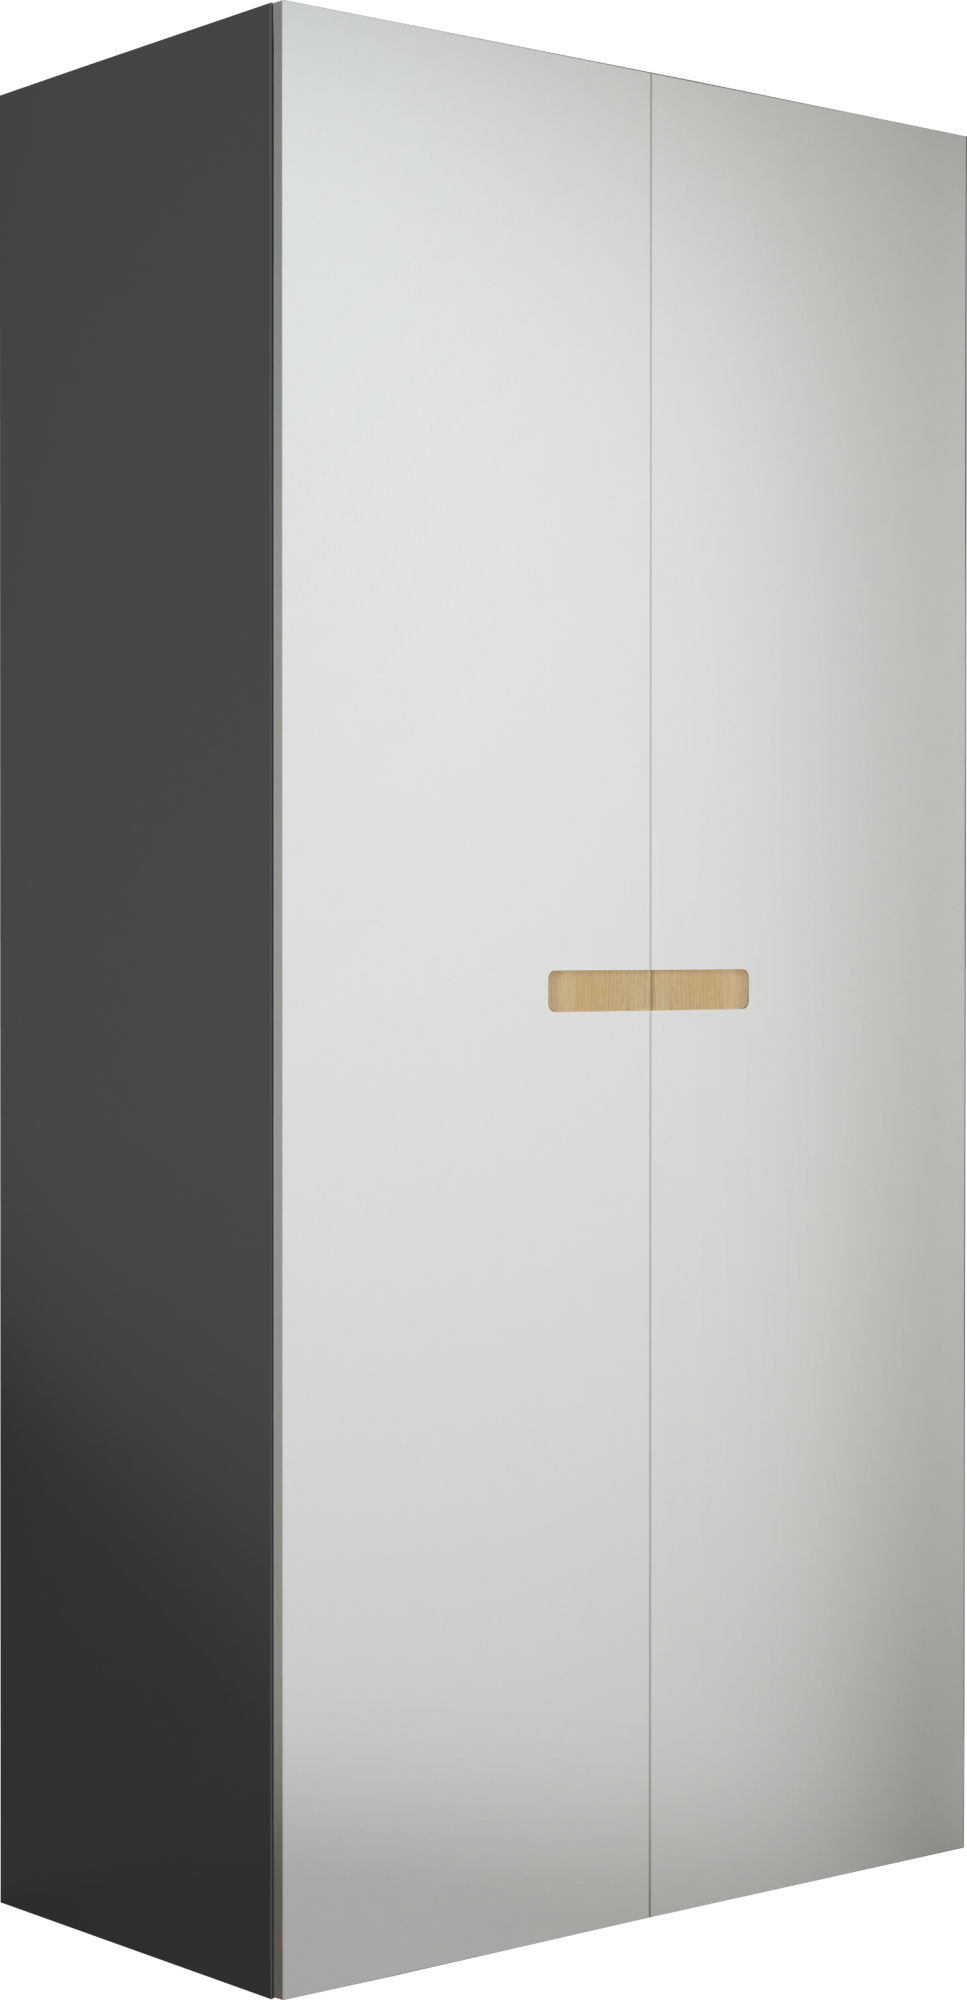 Armario ropero puerta abatible spaceo home nepal blanco-roble 240x120x60cm